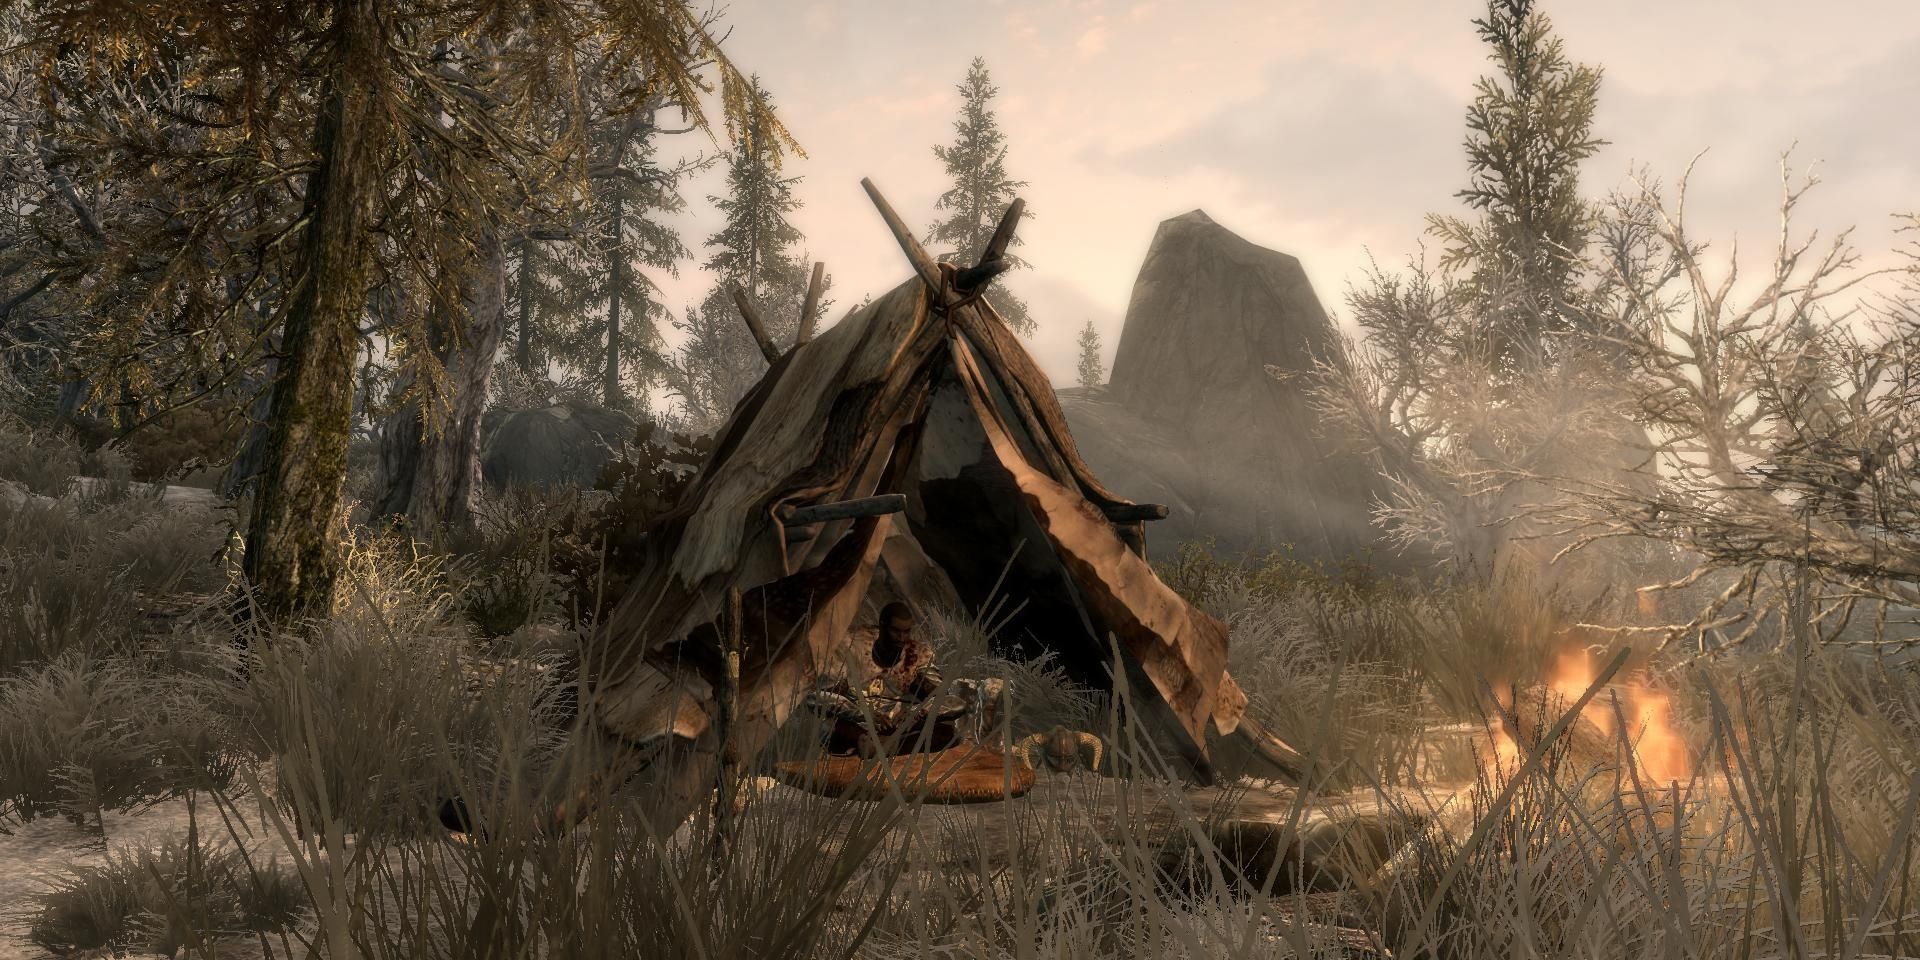 Camping Creation Club mod in Skyrim